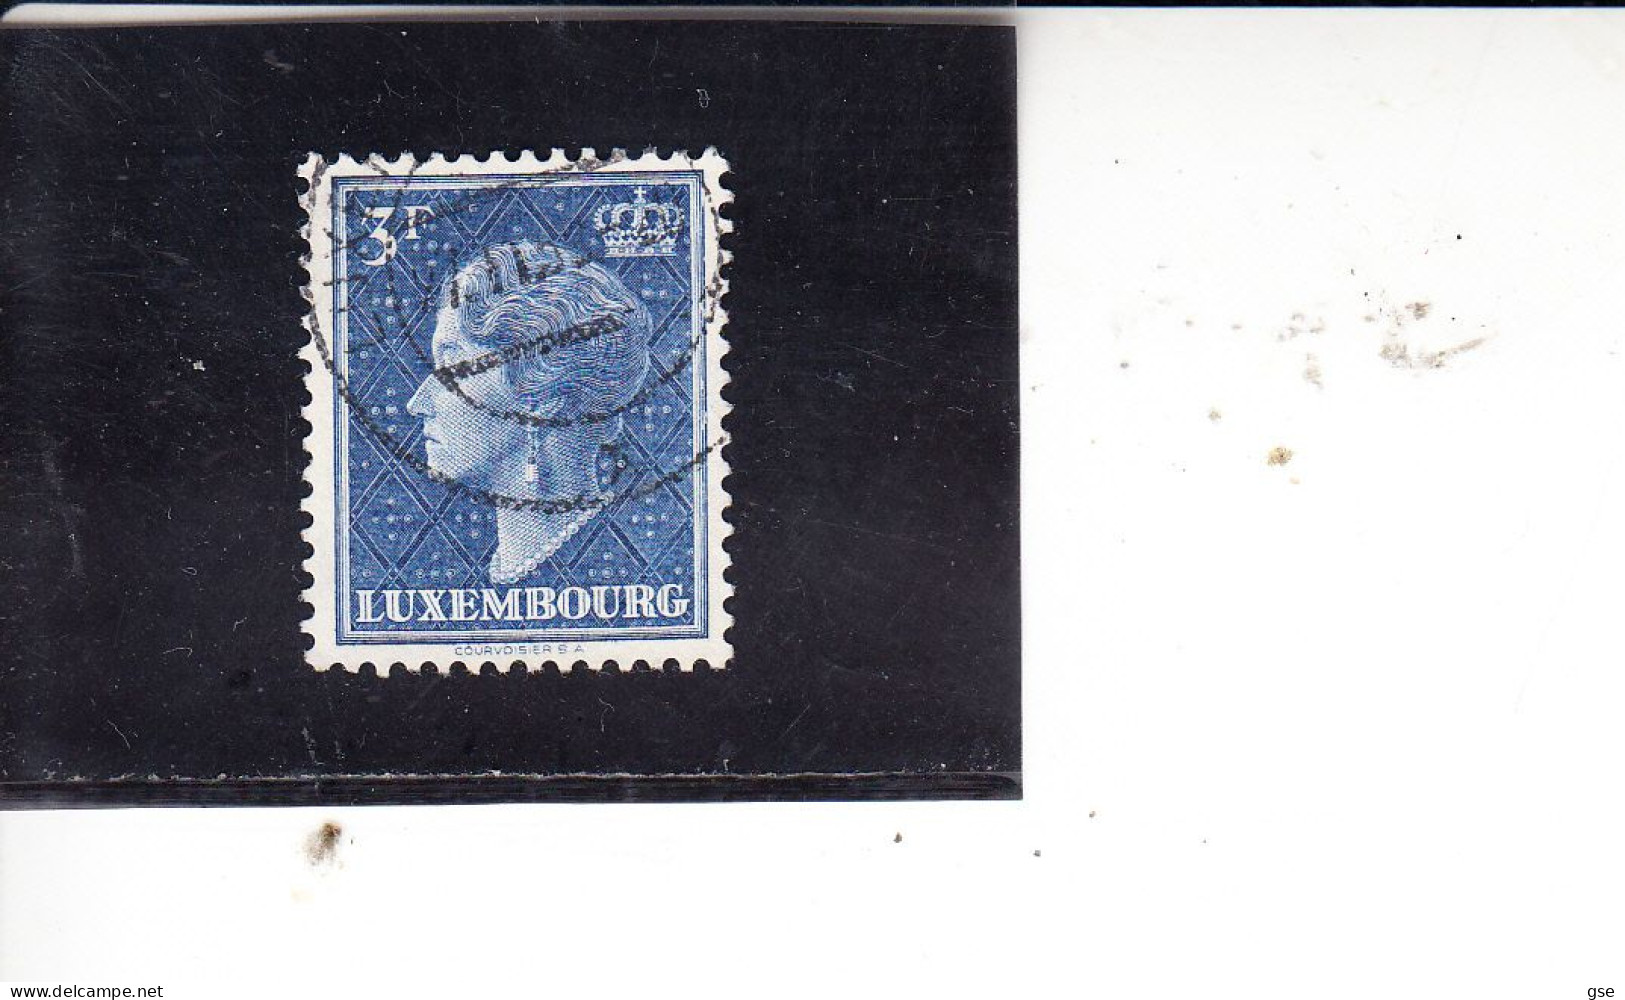 LUSSEMBURGO  1948-53 - Unificato 421B° - Carlotta - Gebraucht